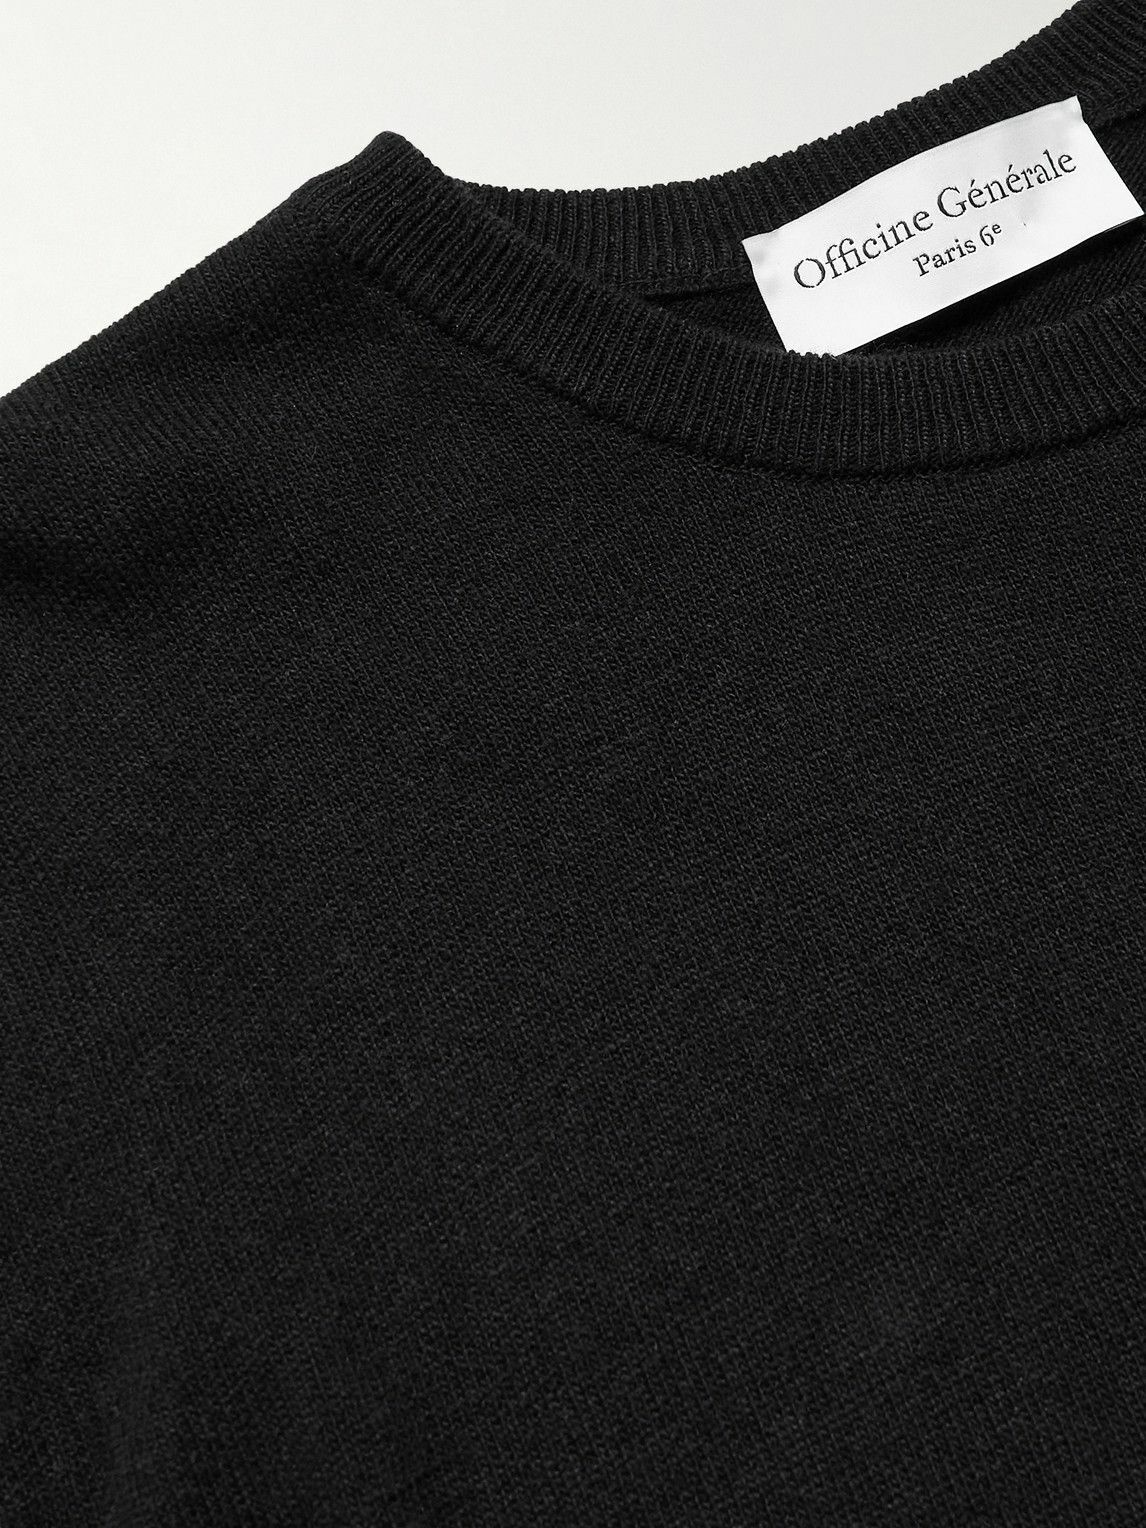 Officine Générale - Knitted Sweater - Black Officine Generale